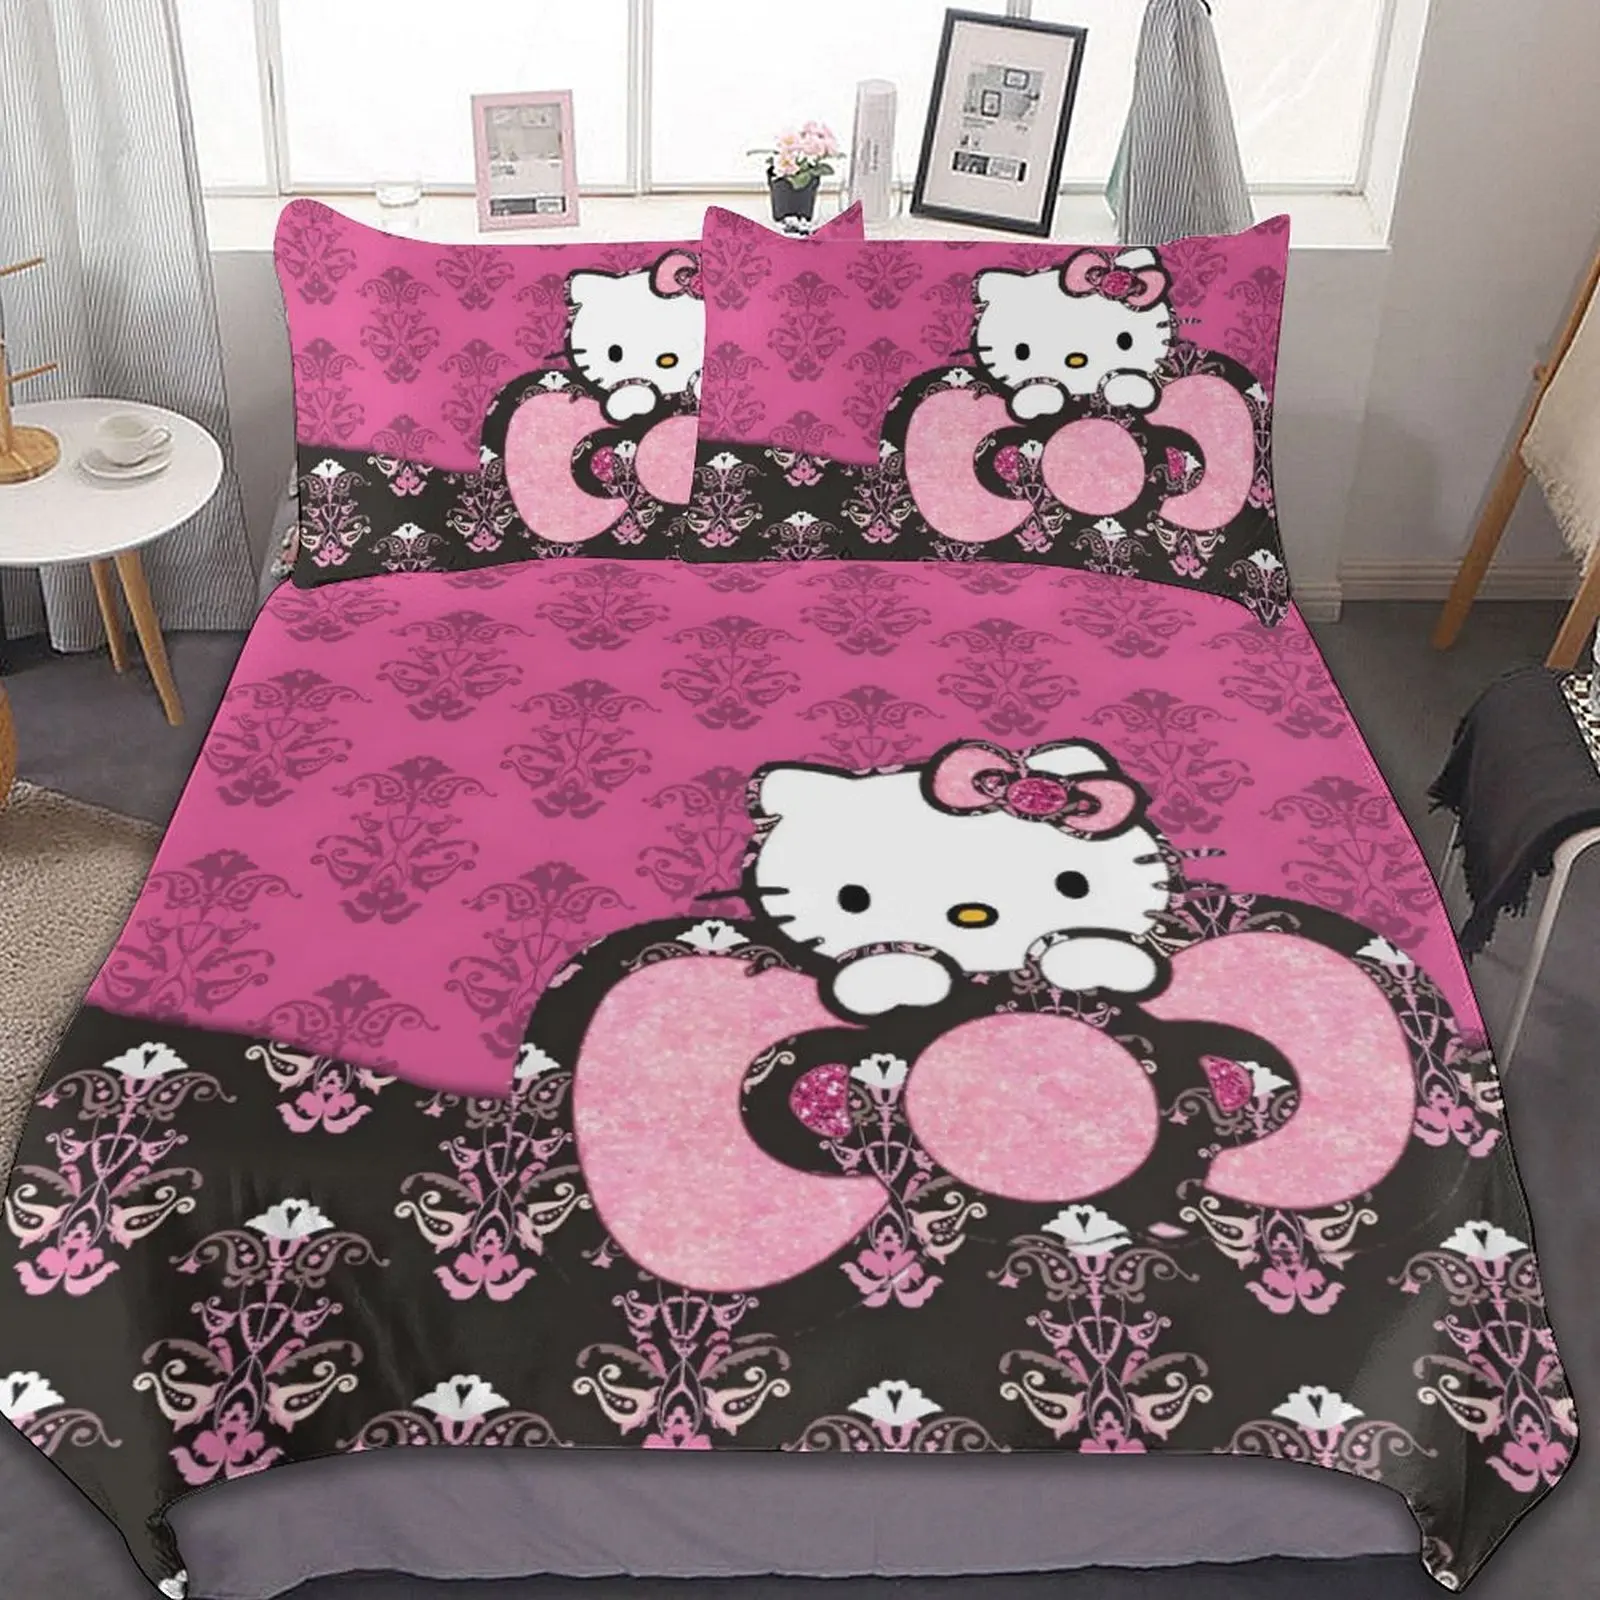 

TAKARA TOMY Sanrio Hello Kittys Bedding Set Quilt Duvet Cover Comforter Pillow Case Bedclothes Children Kid Boy Bed Bedroom Set